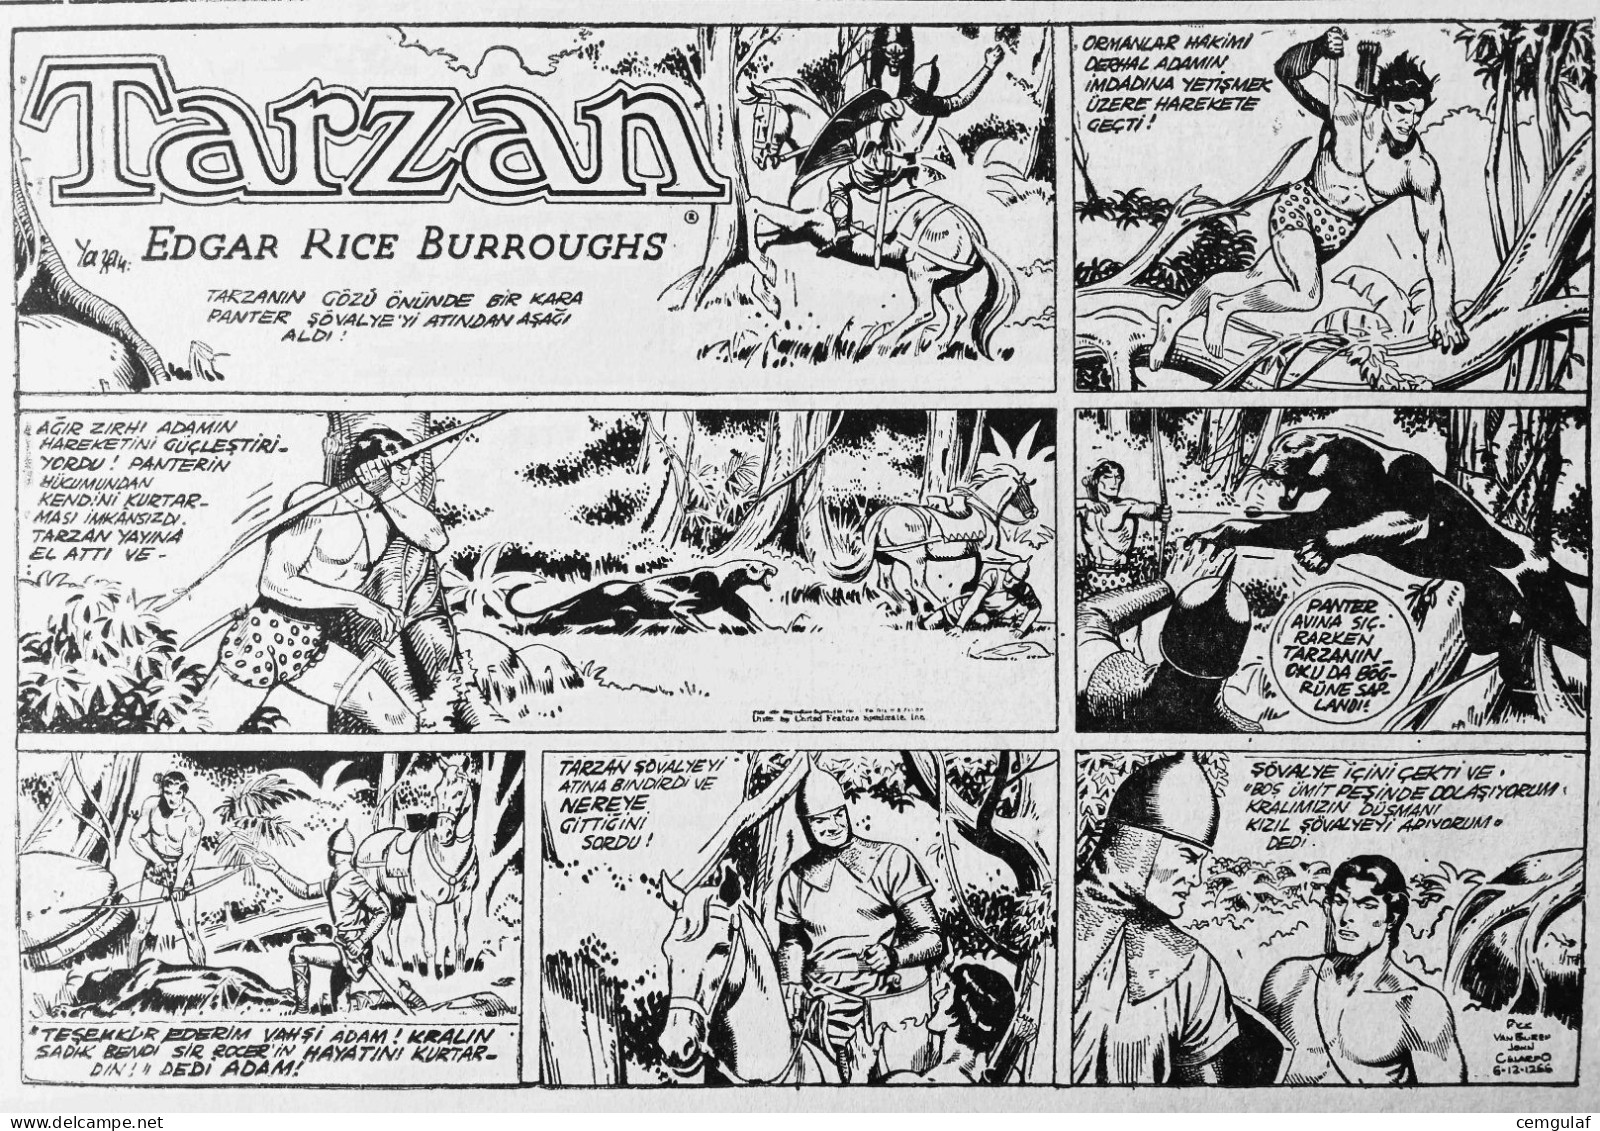 TARZAN-LI'L ABNER-The Katzenjammer Kids Turkish Edition- VATAN NEWSPAPER SUNDAY ADDITION JANUARY 1956 - Collectors